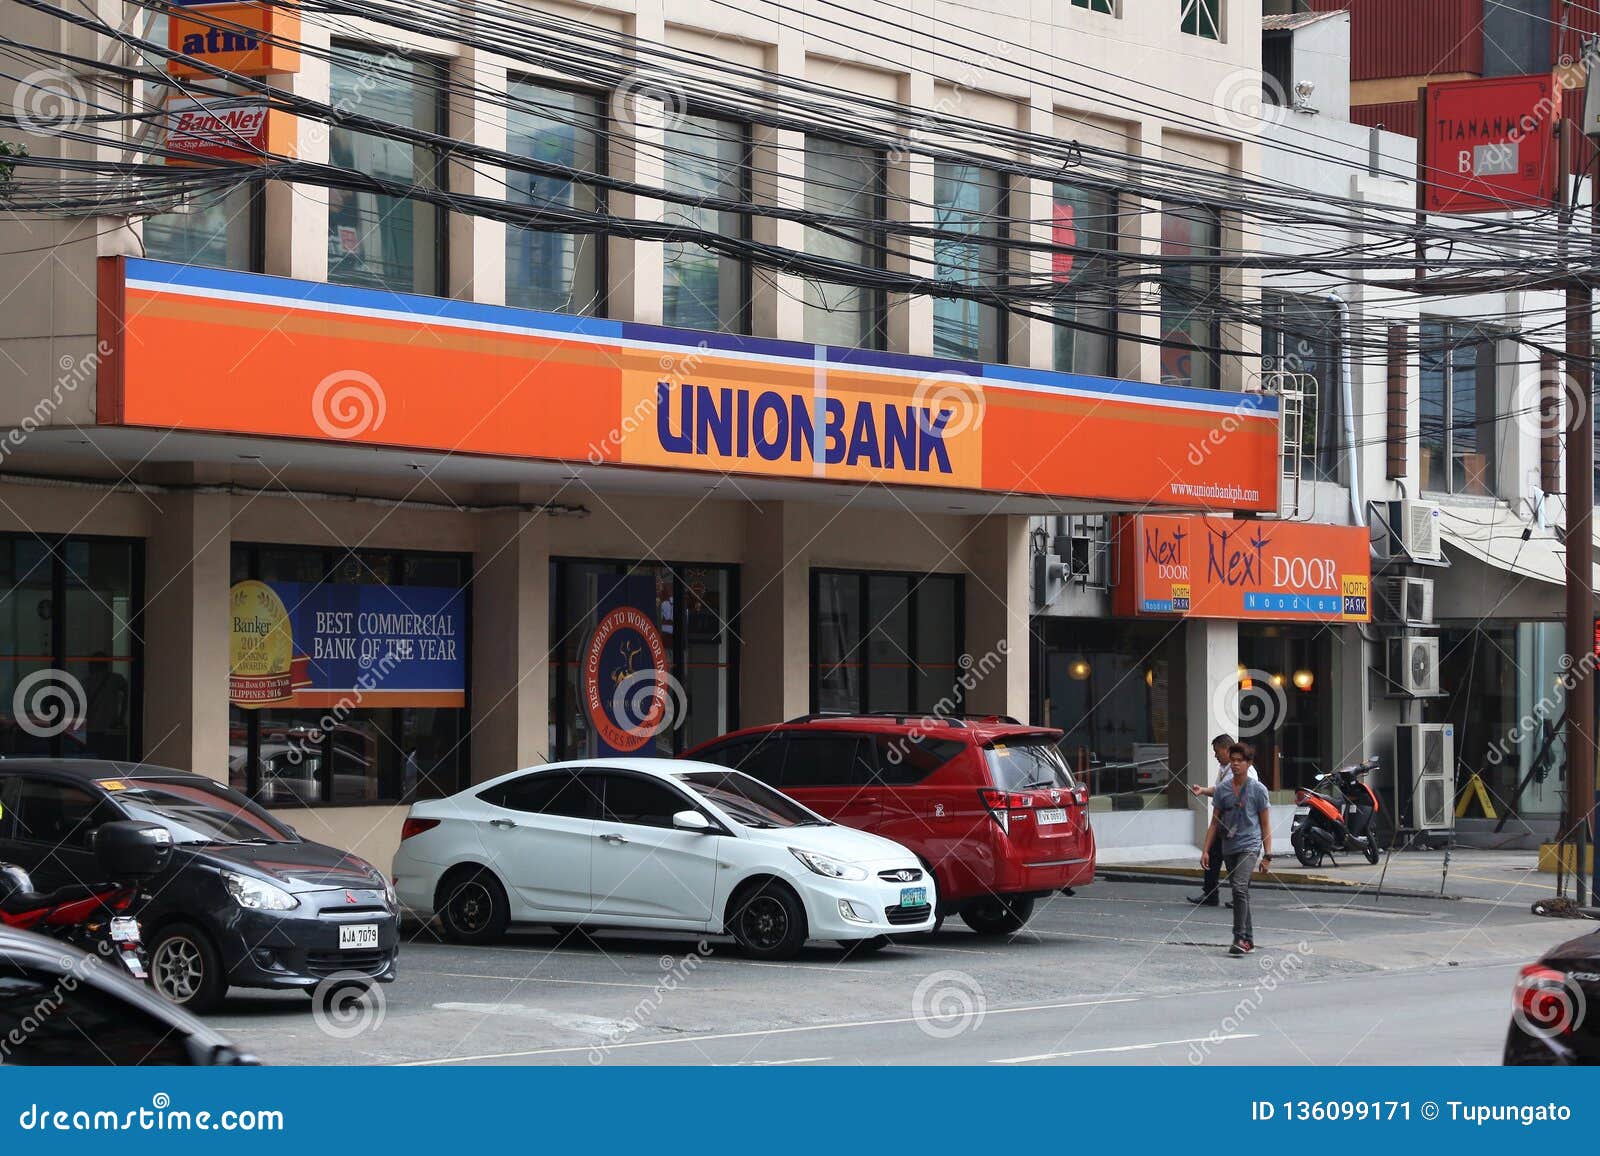 unionbank philippines branches